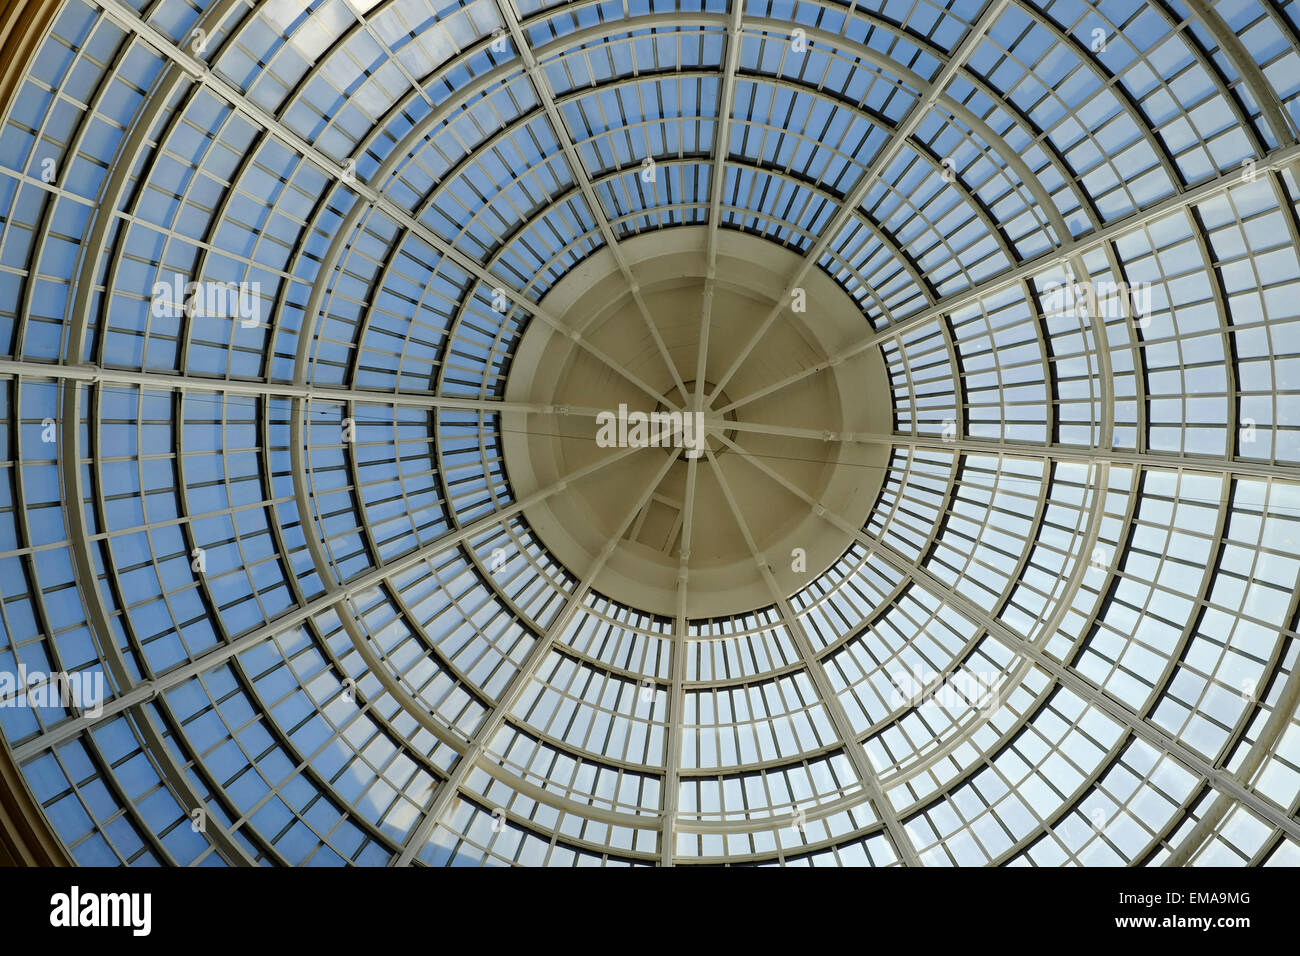 La cúpula de vidrio ornamental de Blackpool edificio jardines de invierno Foto de stock